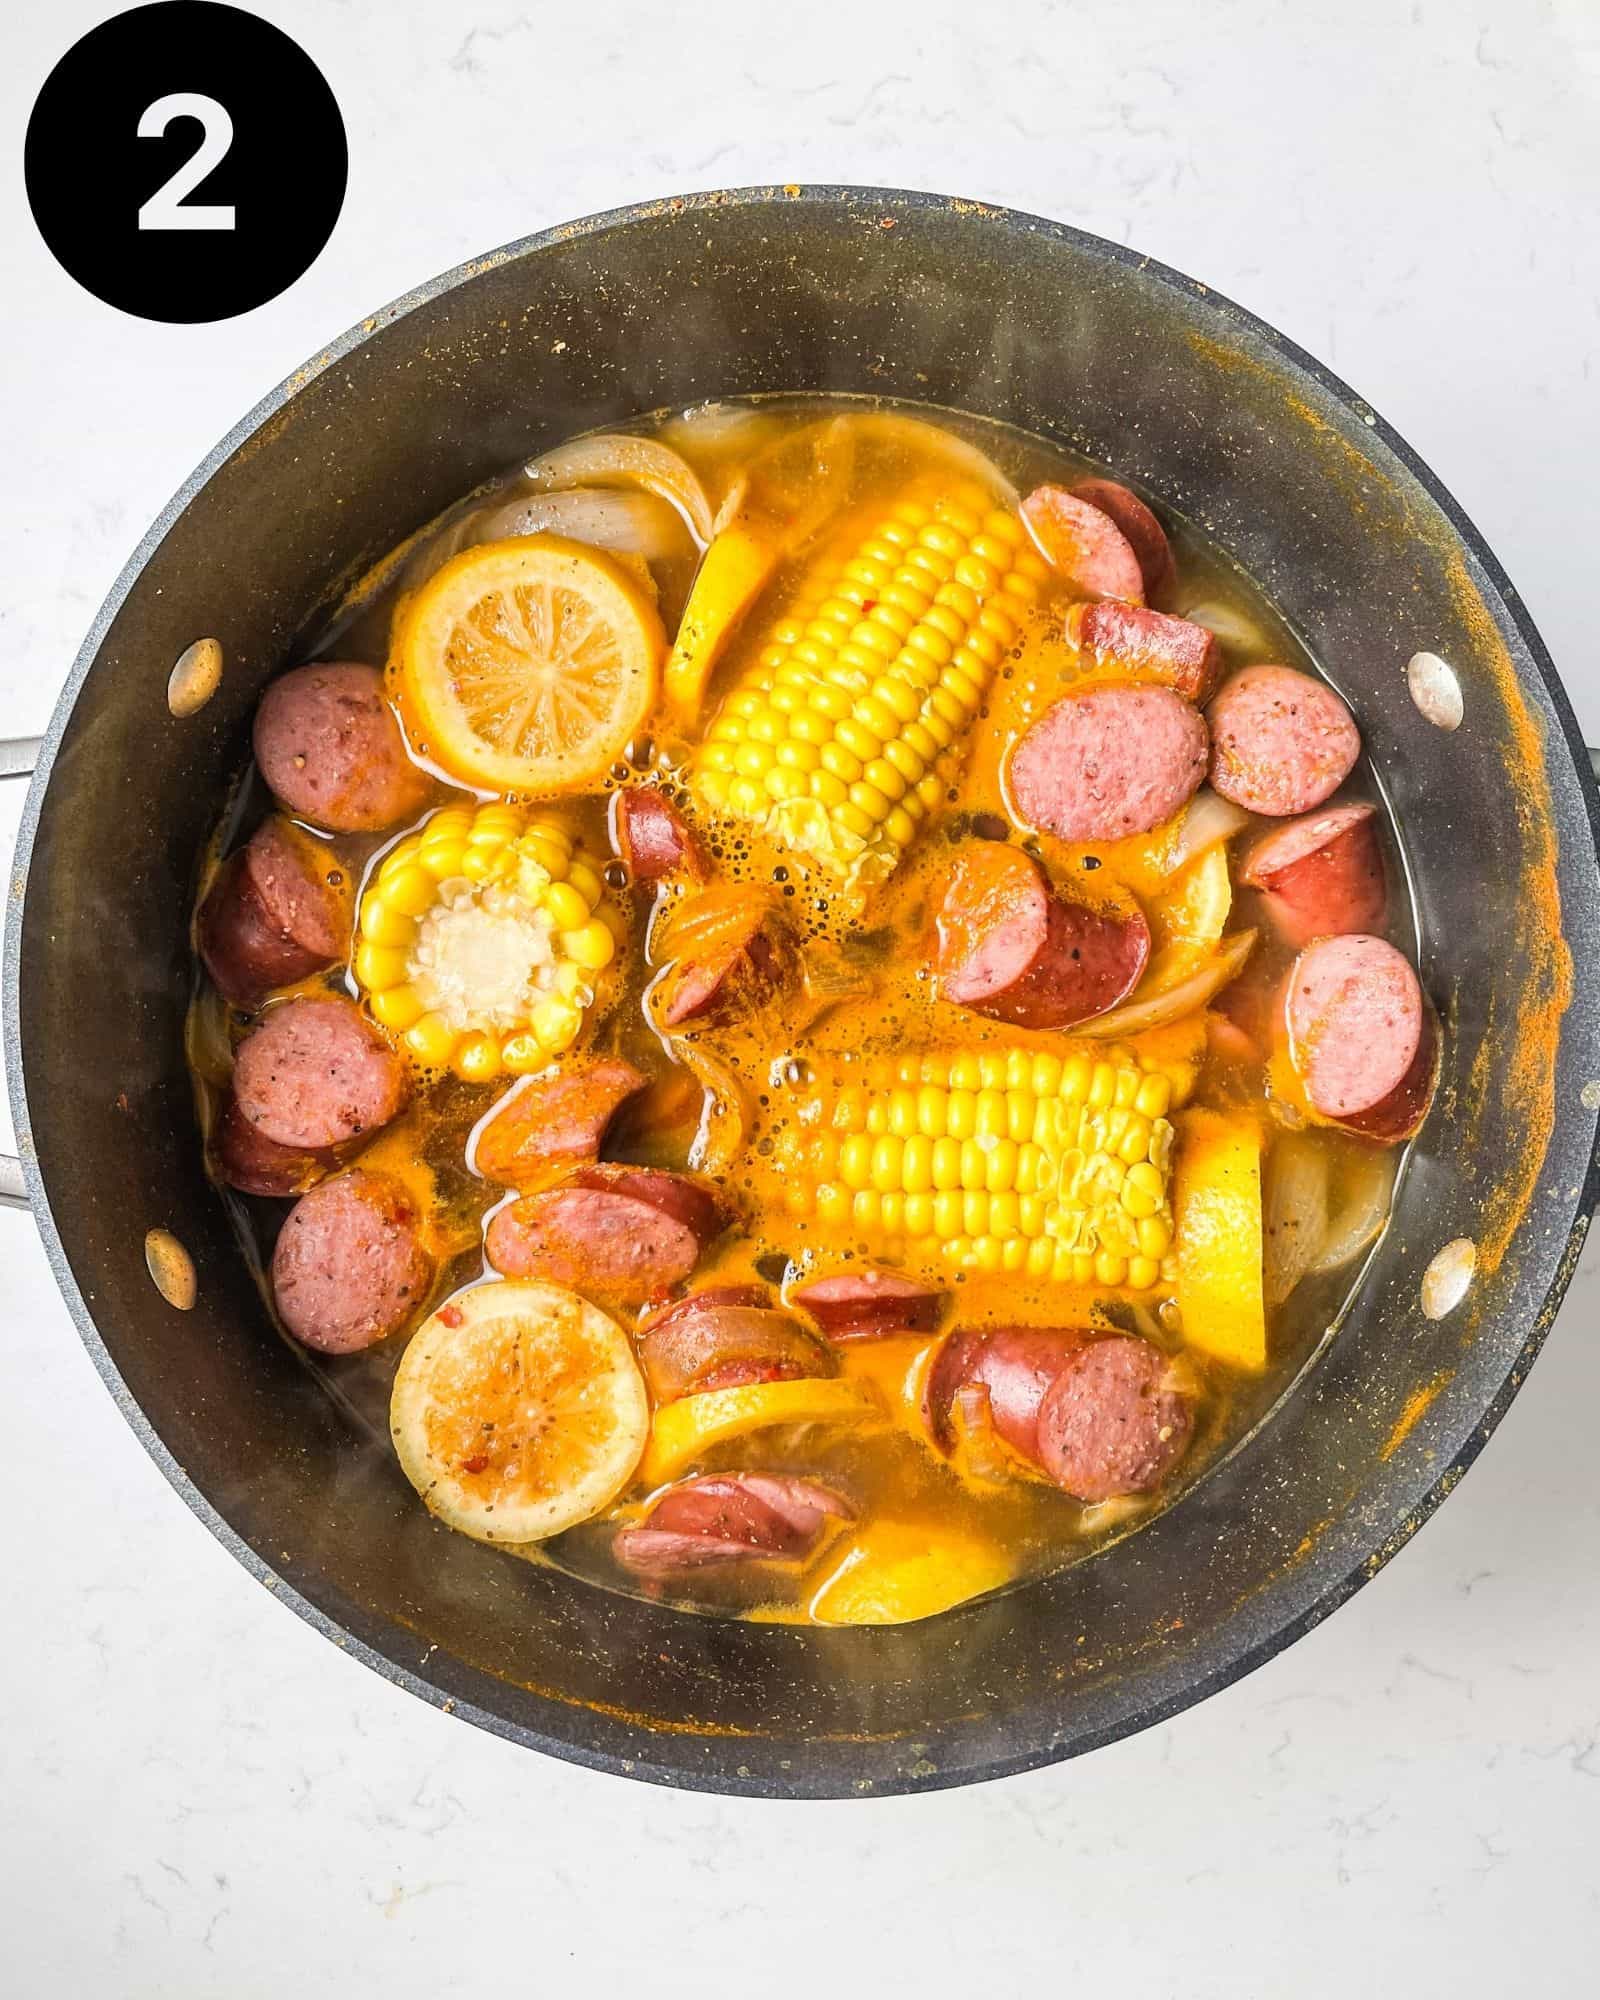 potatoes, corn, sausage, and shrimp boil broth in a large pot.